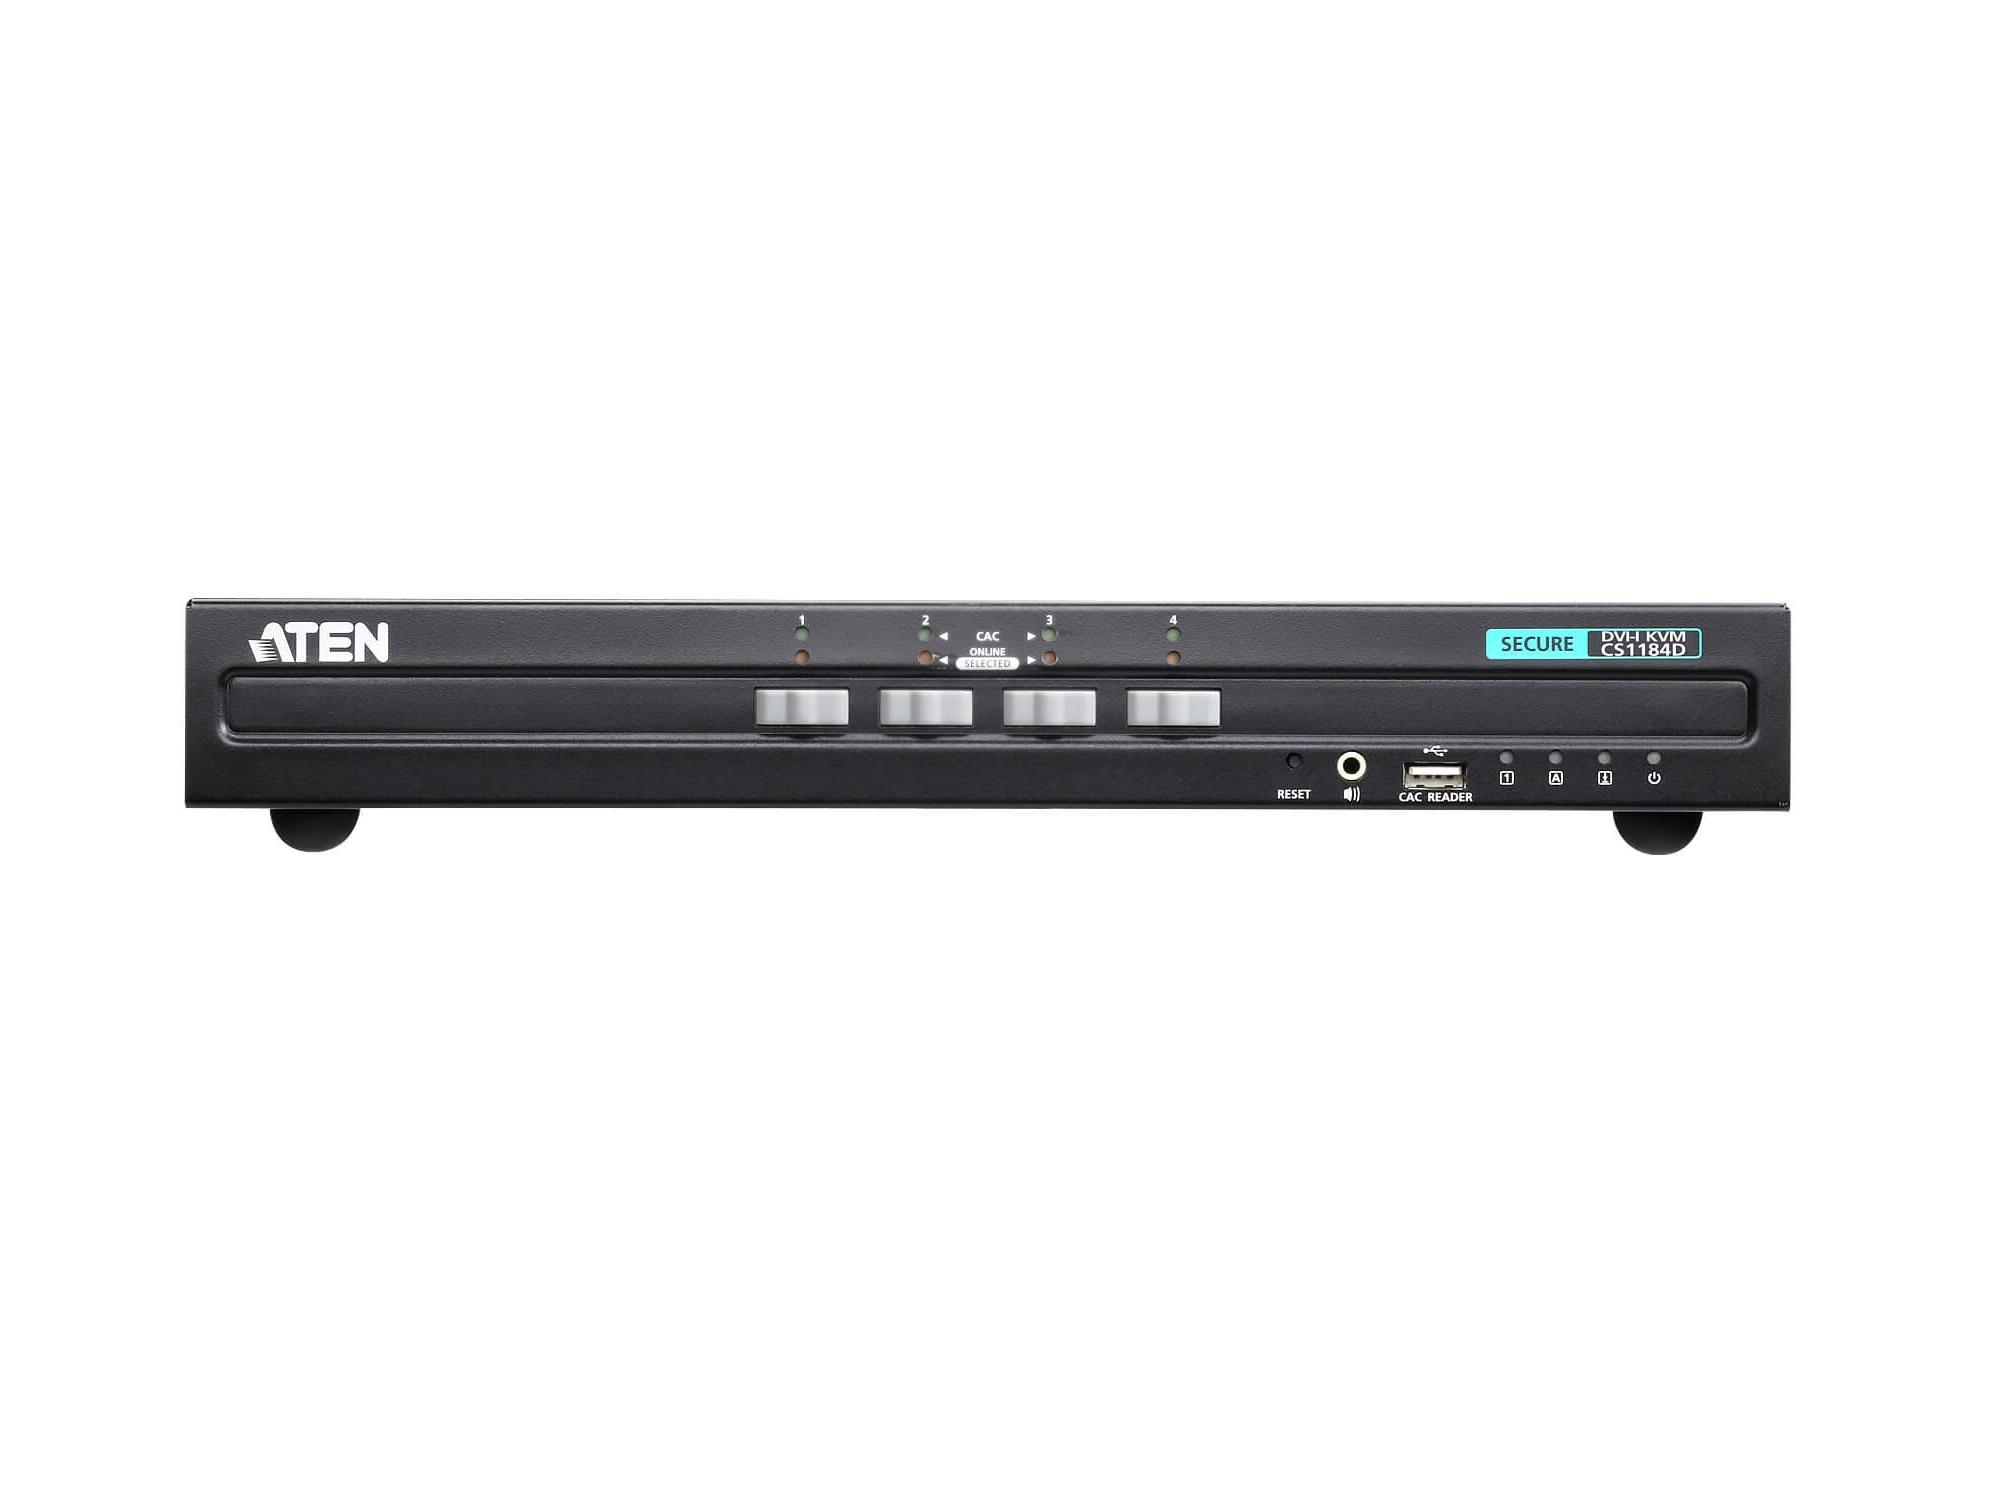 CS1184D 4-Port USB DVI Secure KVM Switch (PSS PP v3.0 Compliant) by Aten